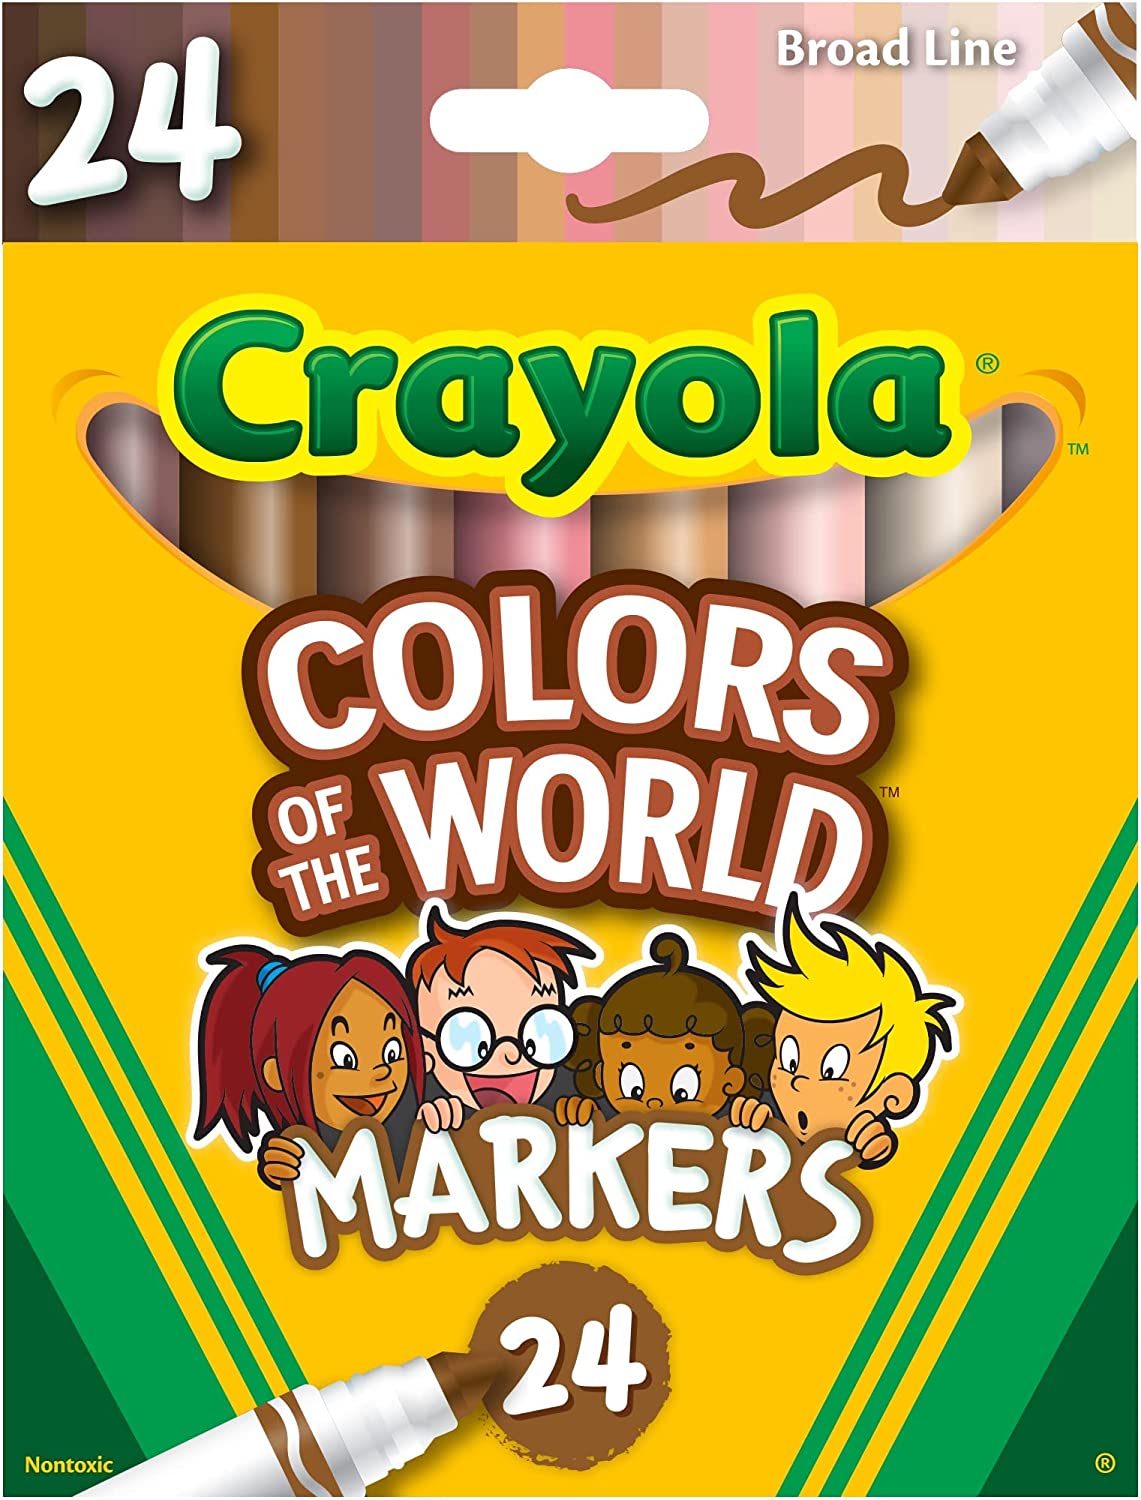 Crayola Colors of the World 24ct BL Markers カラー・オブ・ザ・ワールド 世界のお友達 マーカー24色